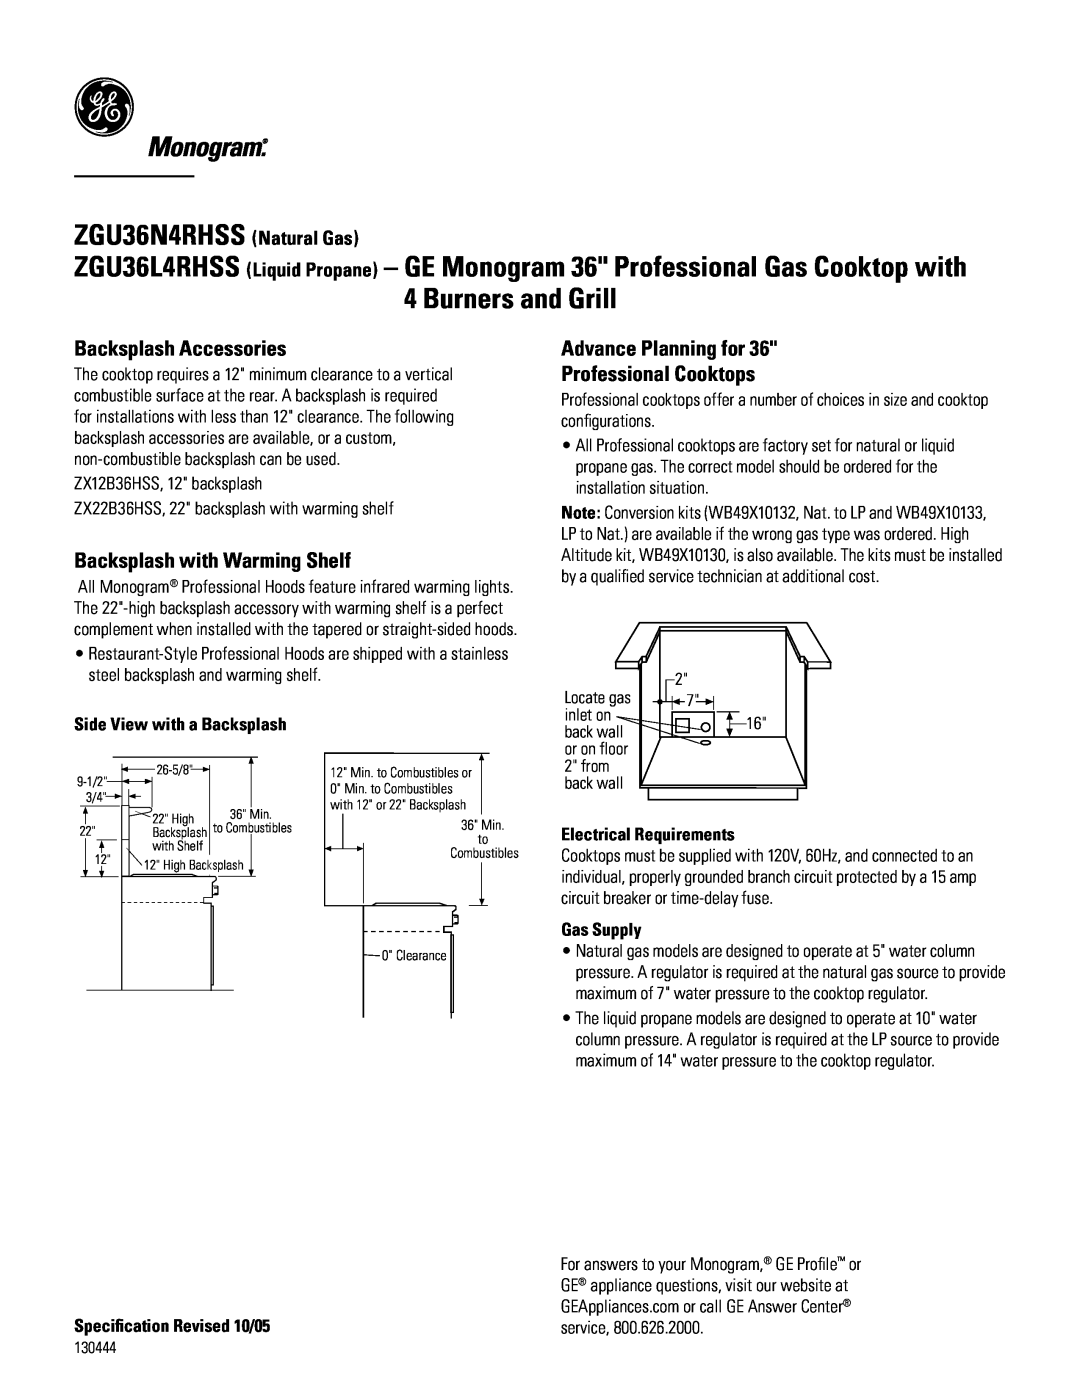 GE Monogram ZGU36N4RHSS Backsplash Accessories, Backsplash with Warming Shelf, Advance Planning for Professional Cooktops 